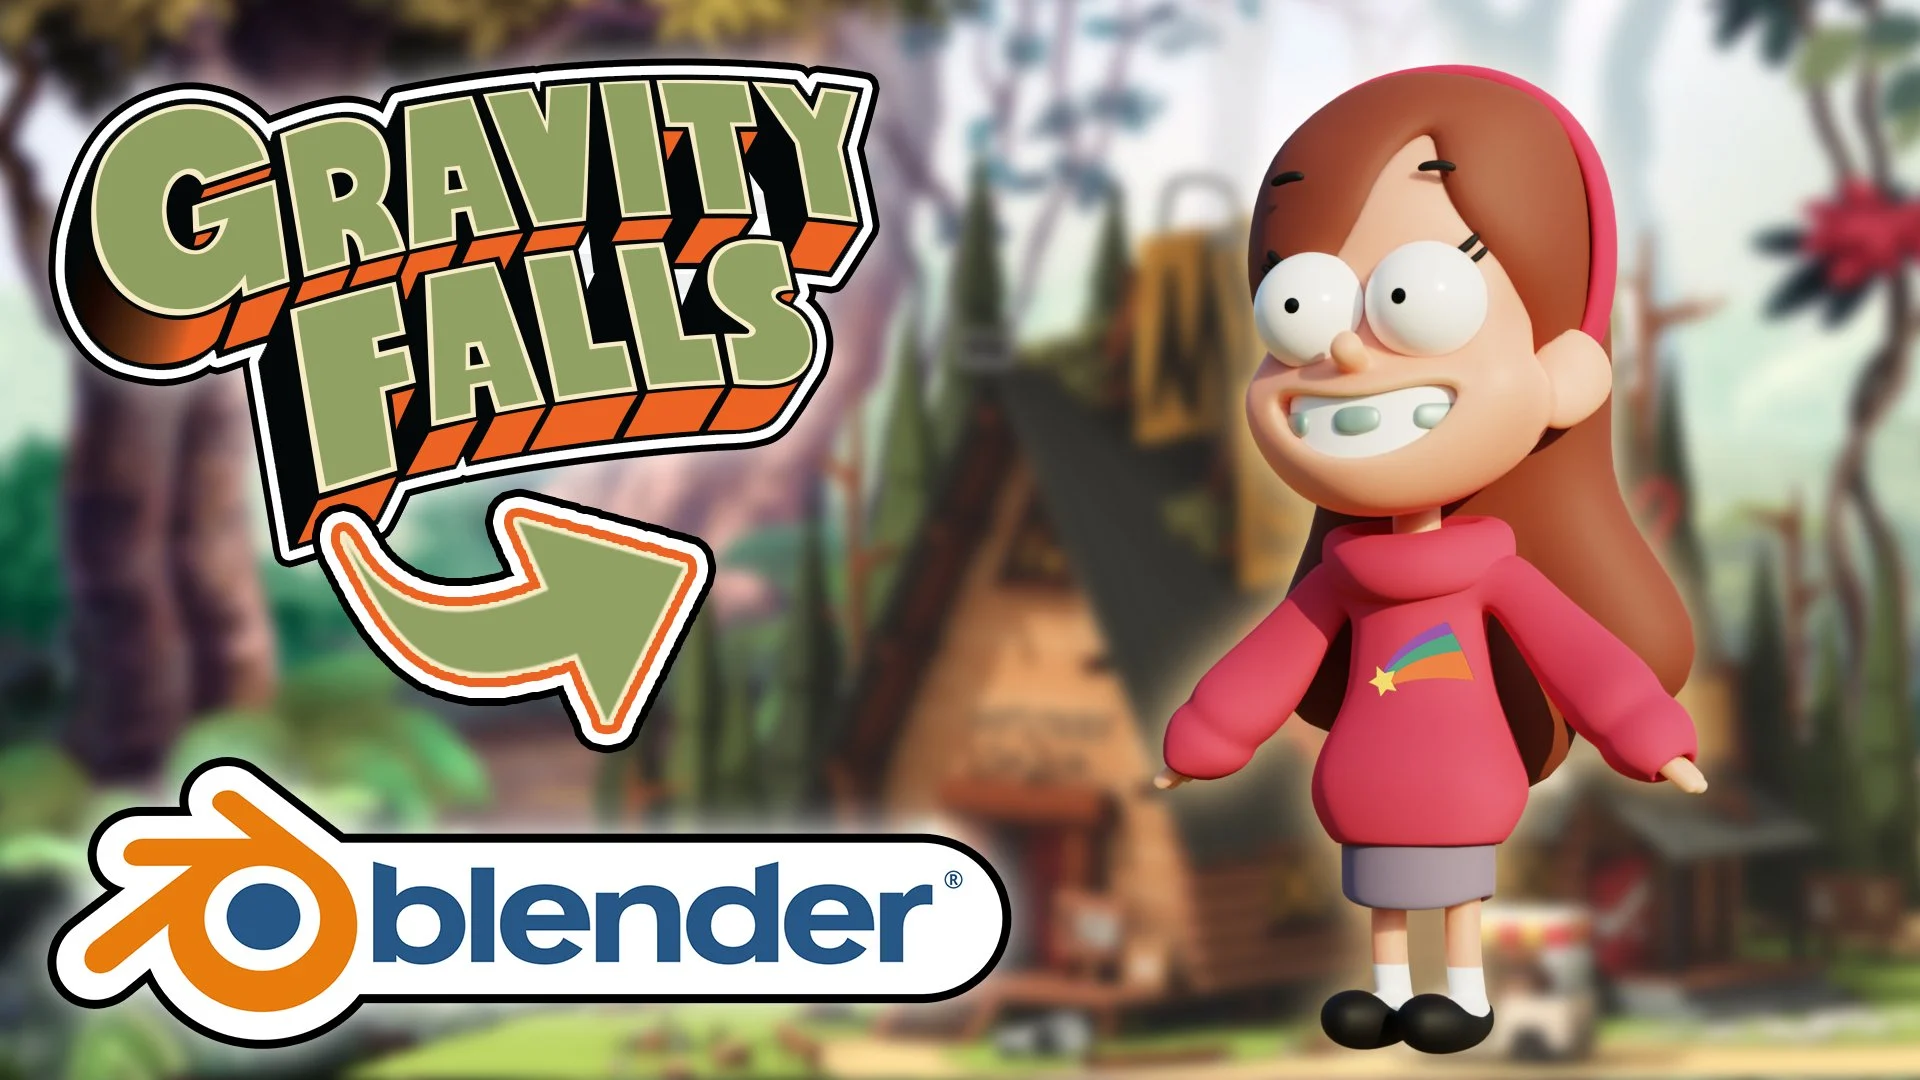 [VIP] Get Good at Blender Create a 3D "Gravity Falls" Character